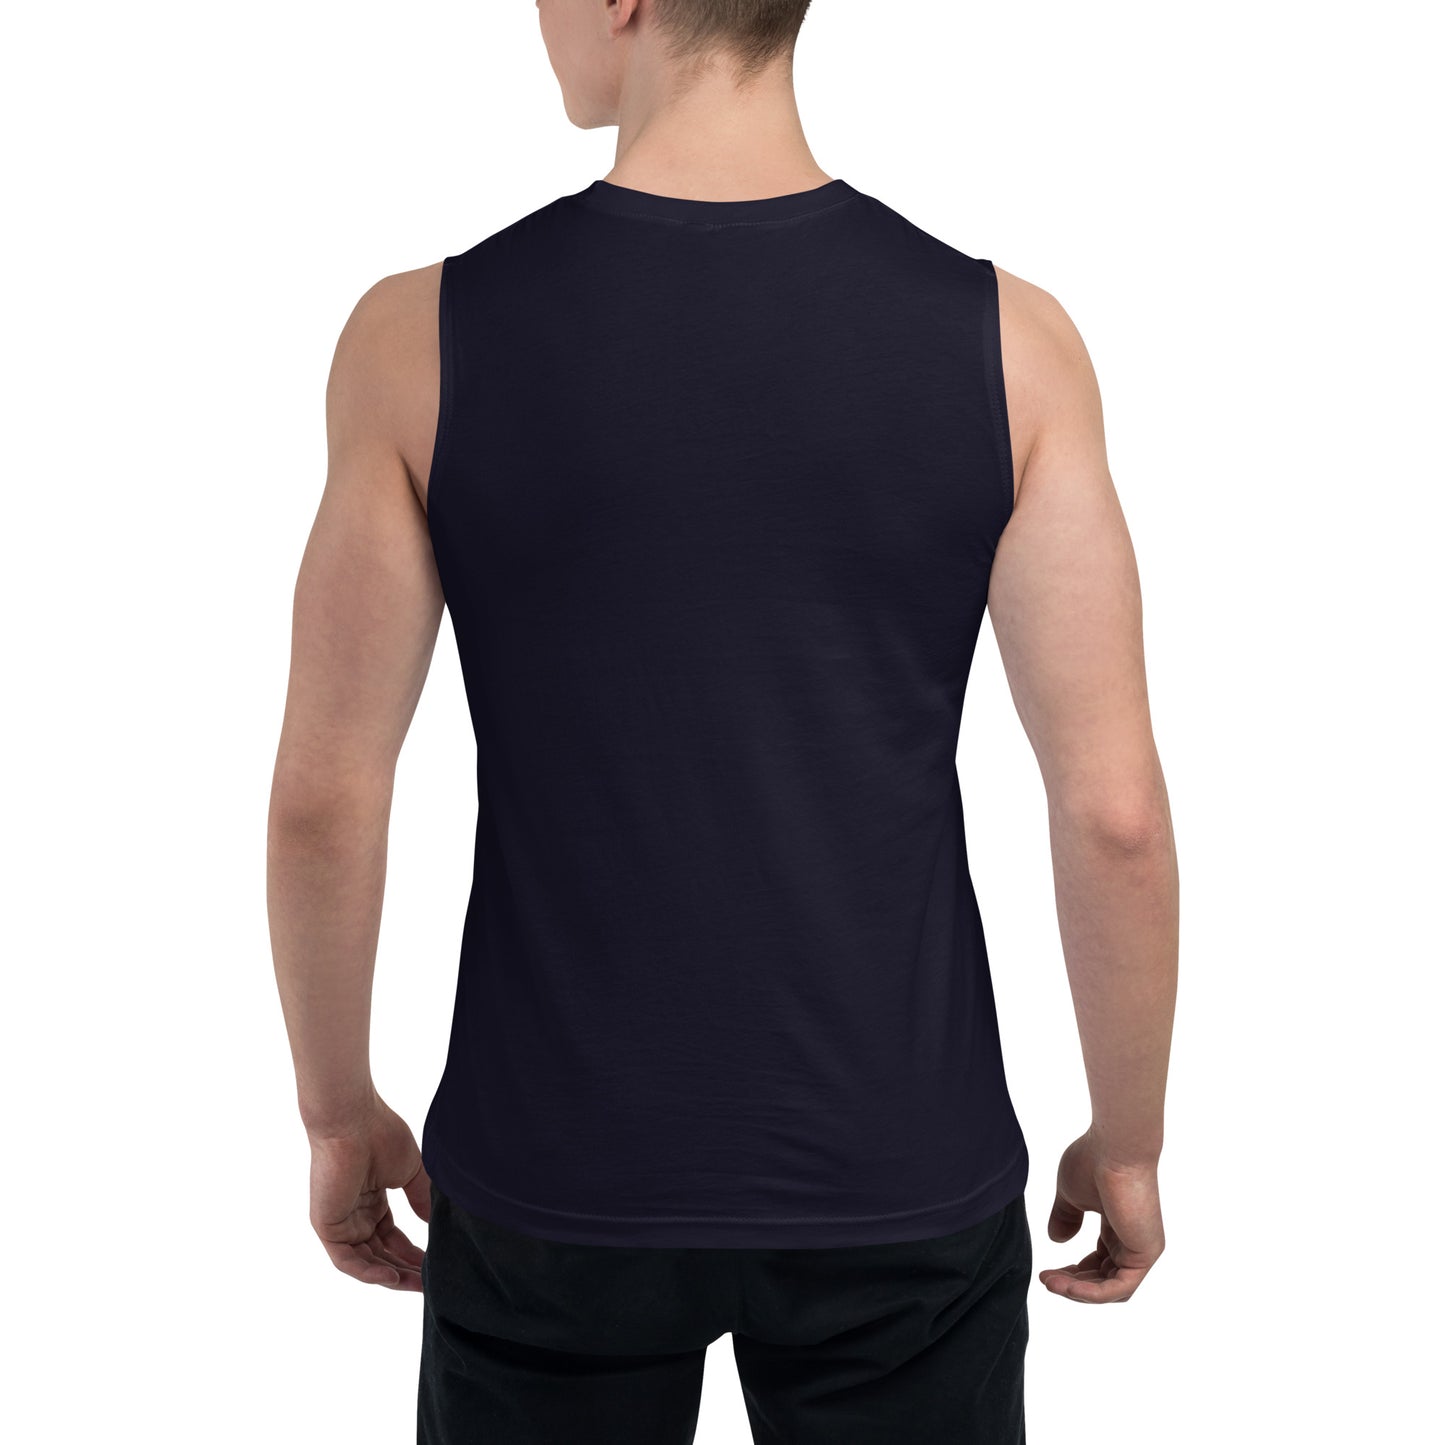 ELEVATE Muscle Shirt (Black)